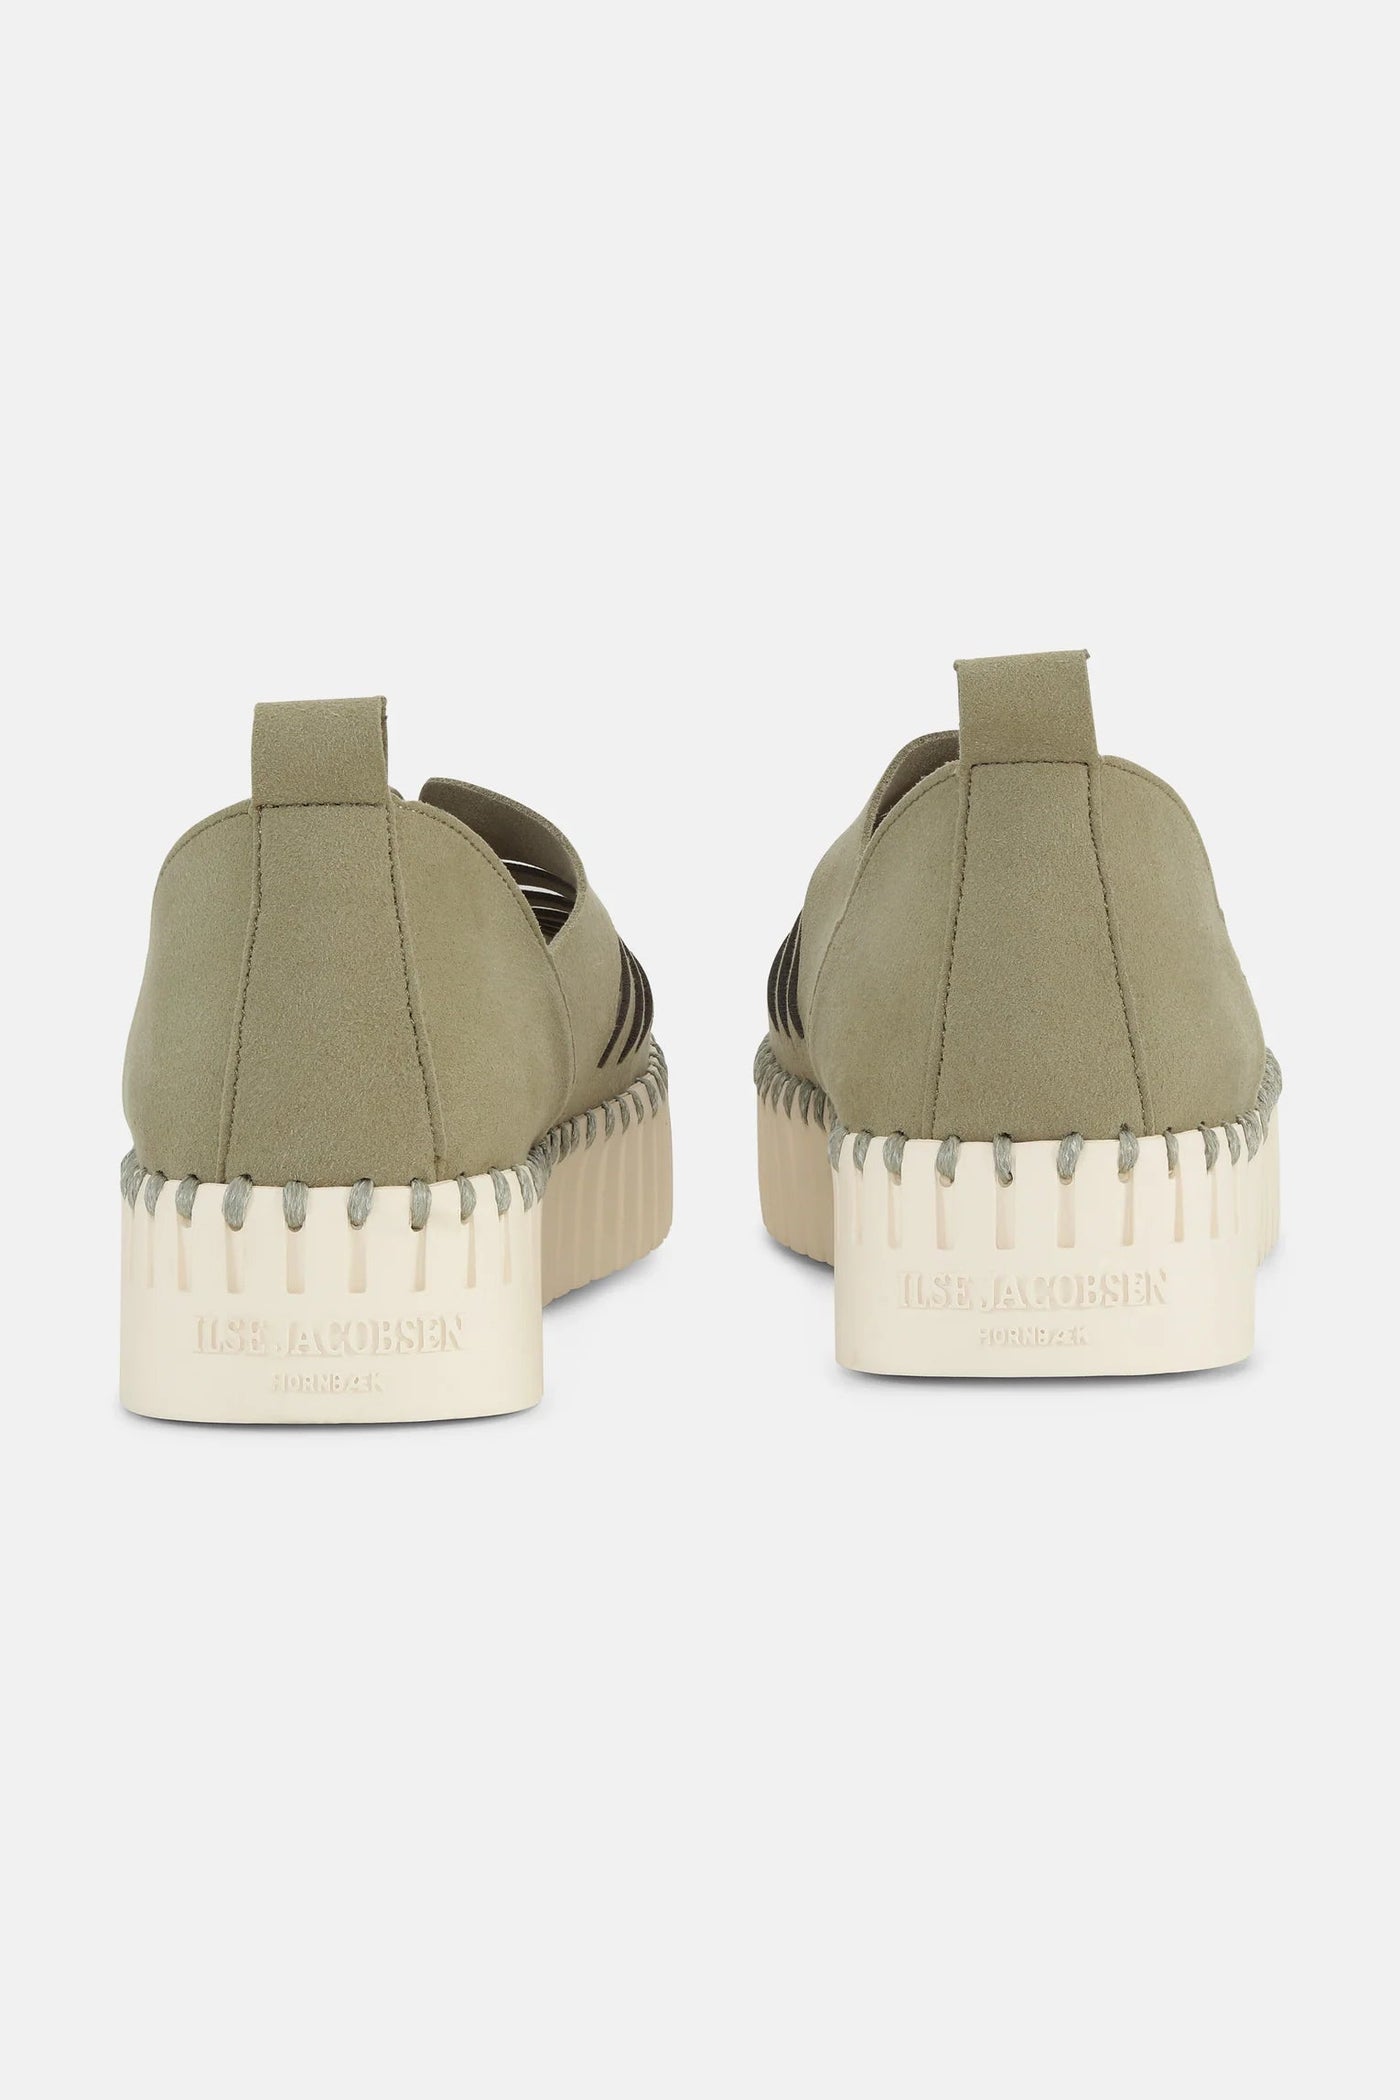 Ilse Jacobsen Platform Sandals - Army-Accessories-Ohh! By Gum - Shop Sustainable